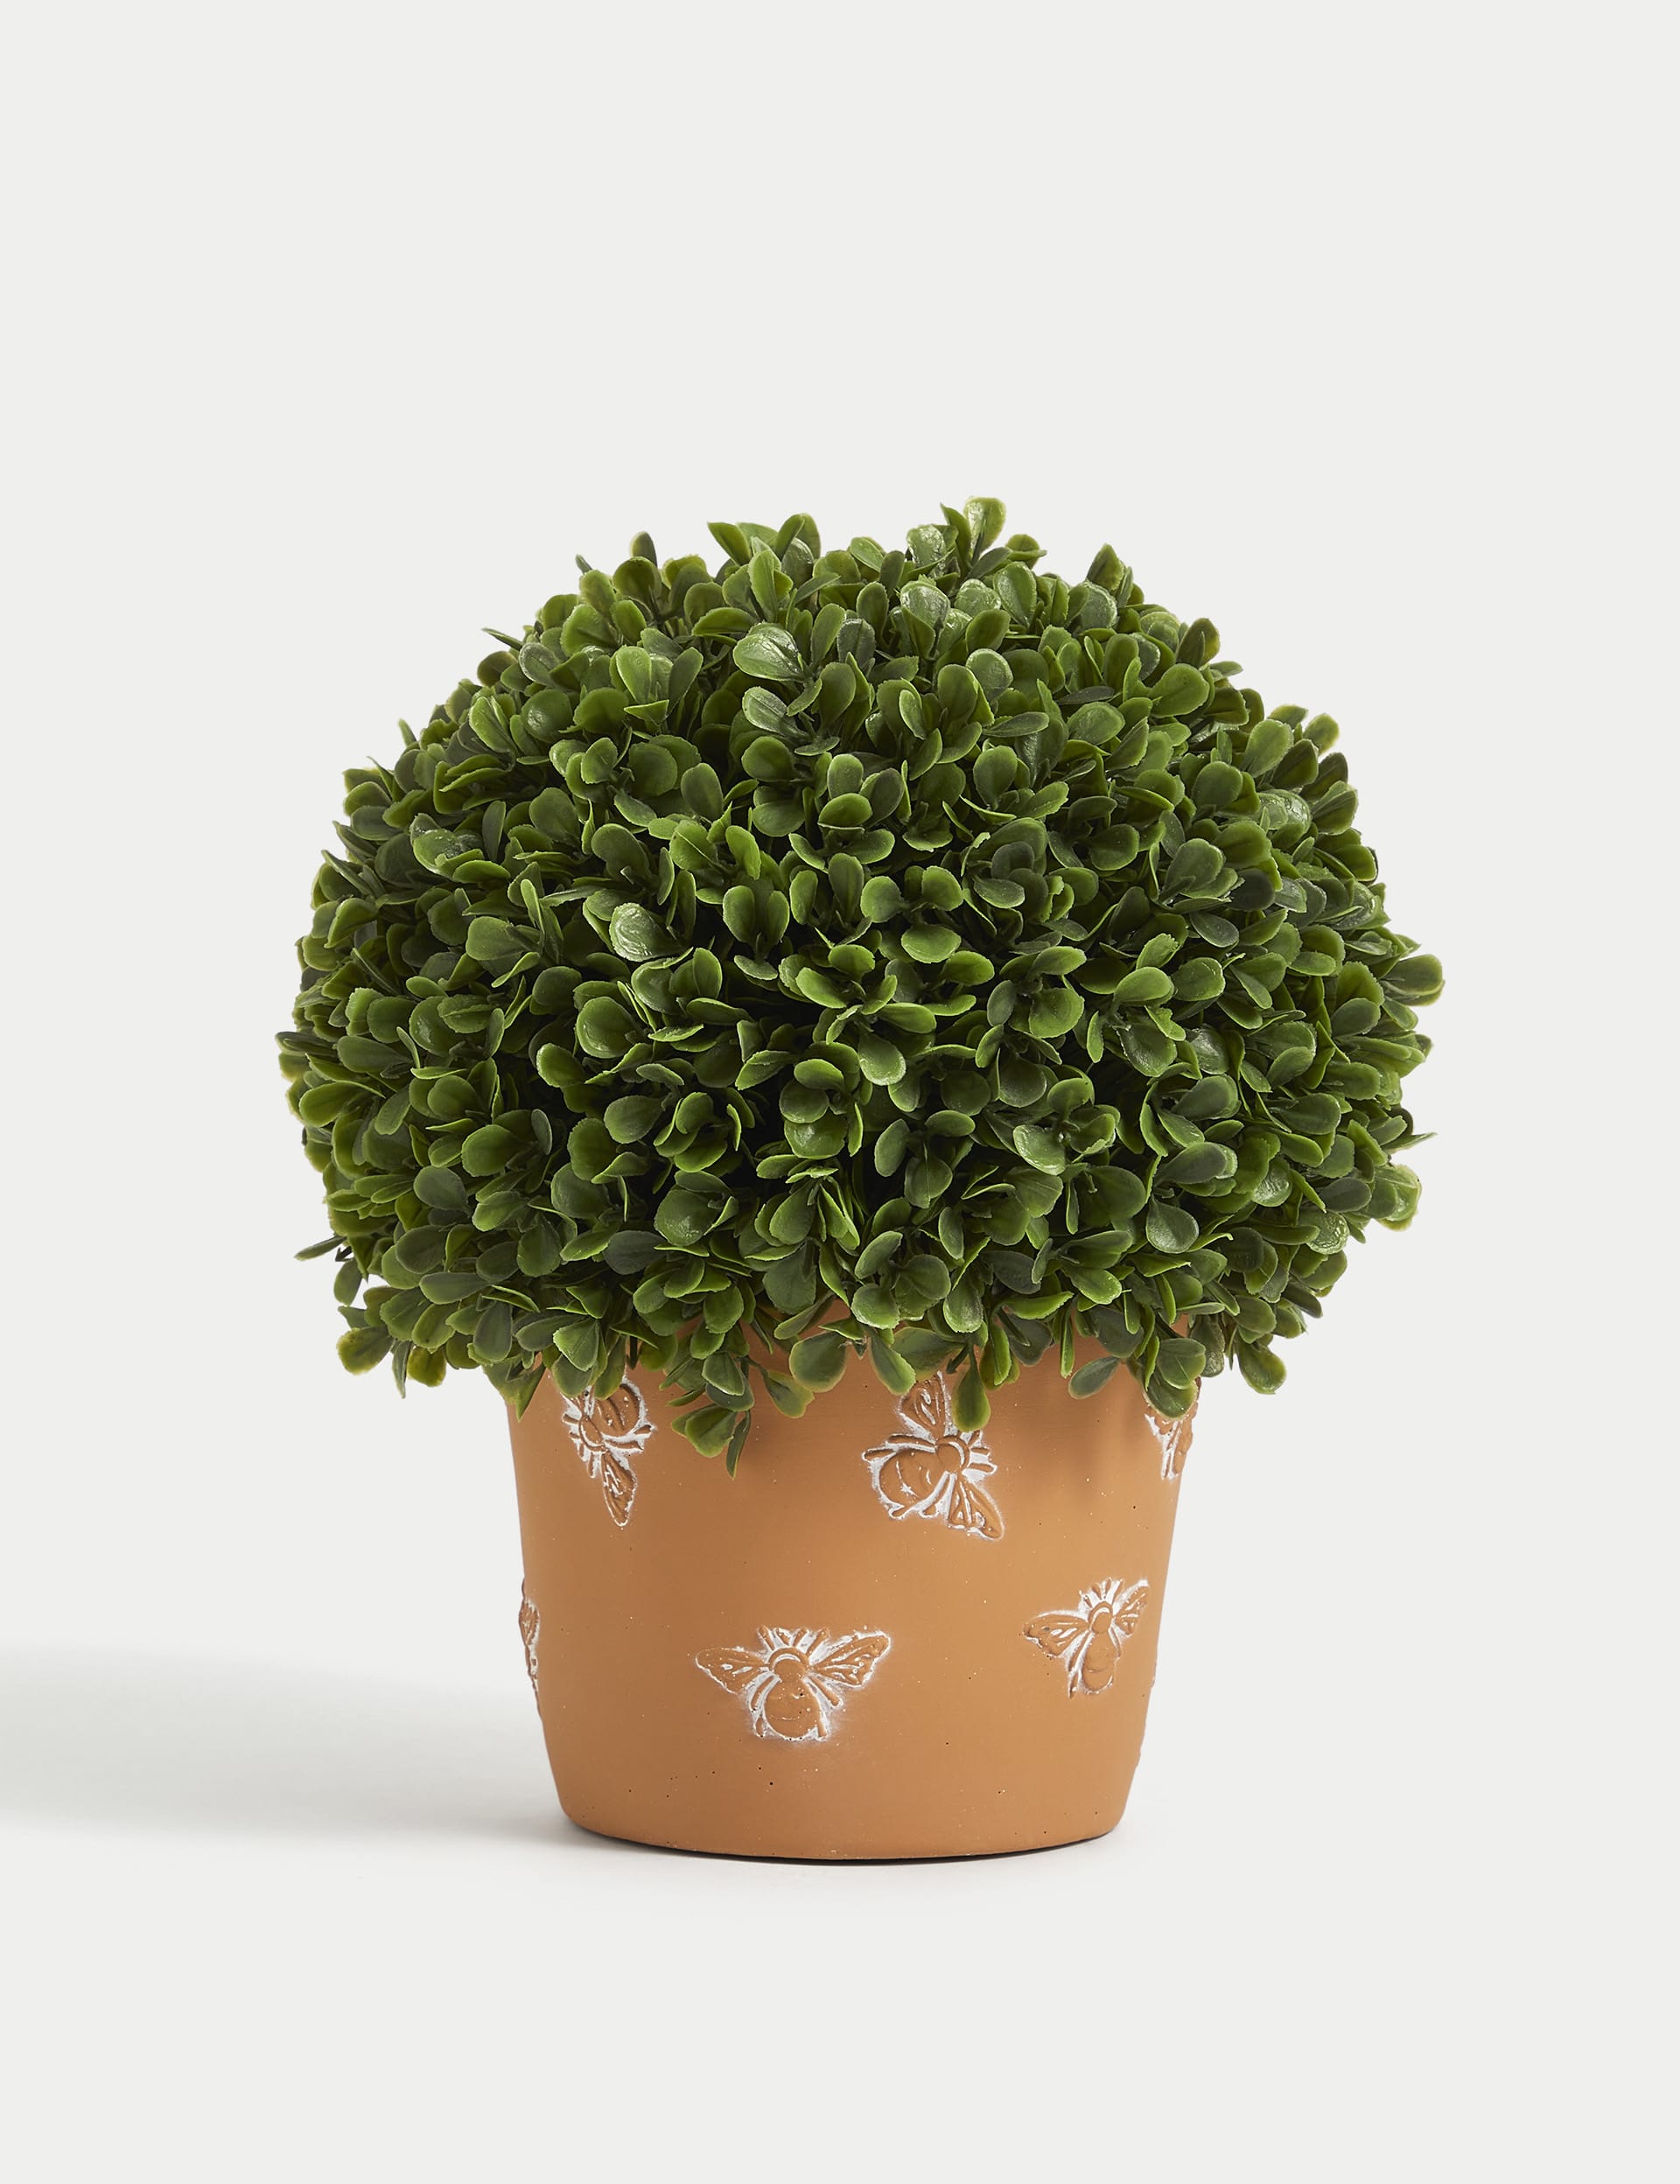 Artificial Topiary Ball in Ceramic Bee Pot